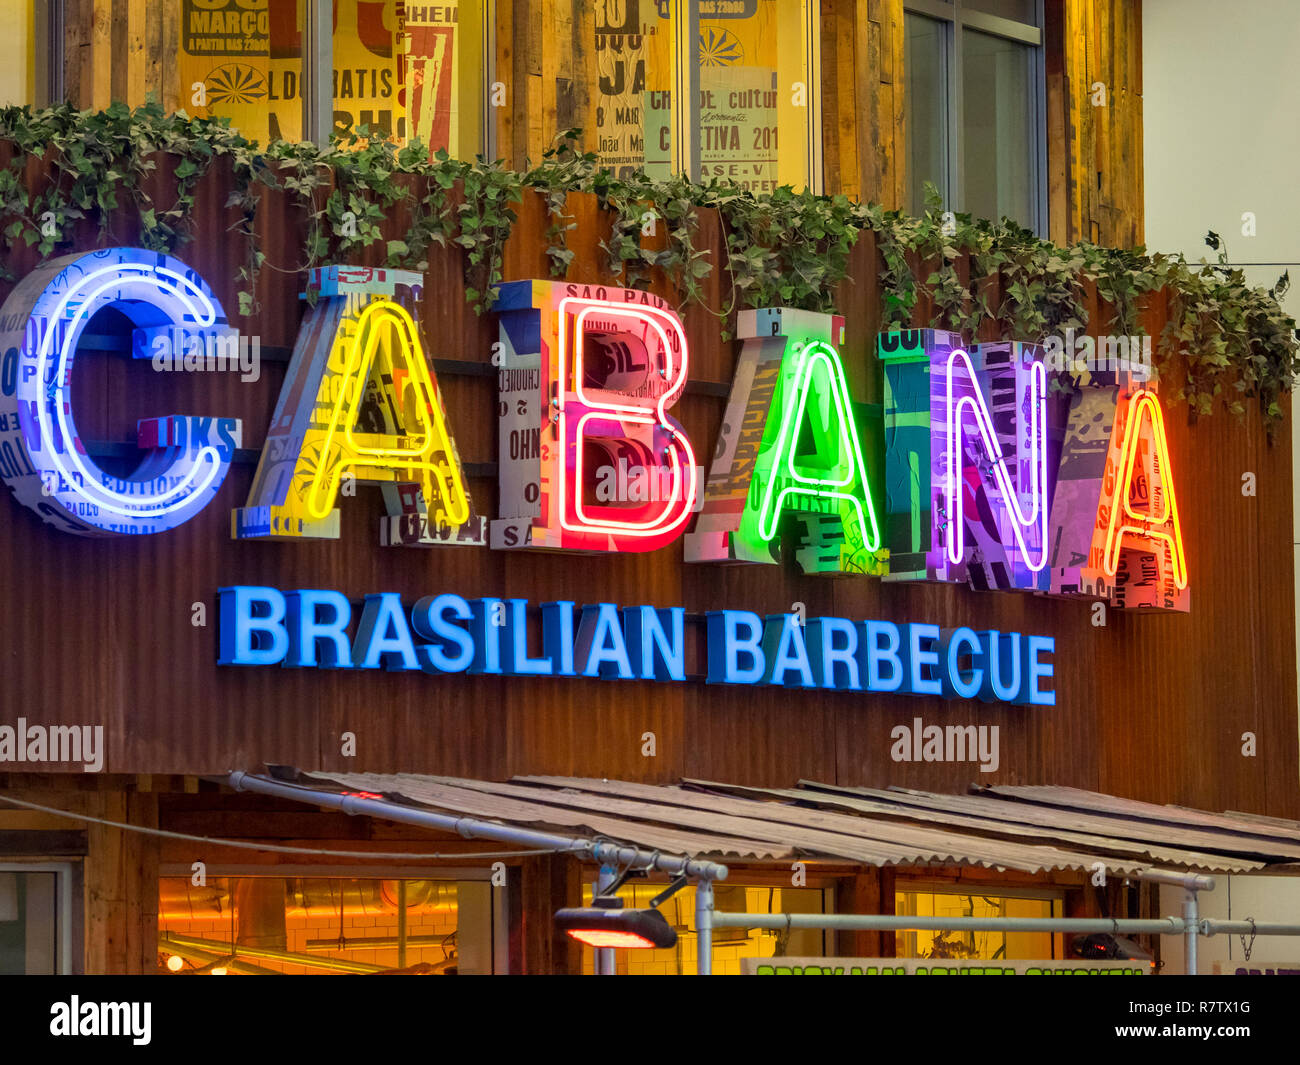 Cabana Brasilian Barbecue Restaurant brésilien au London O2 Arena, Greenwich, Angleterre, RU Banque D'Images